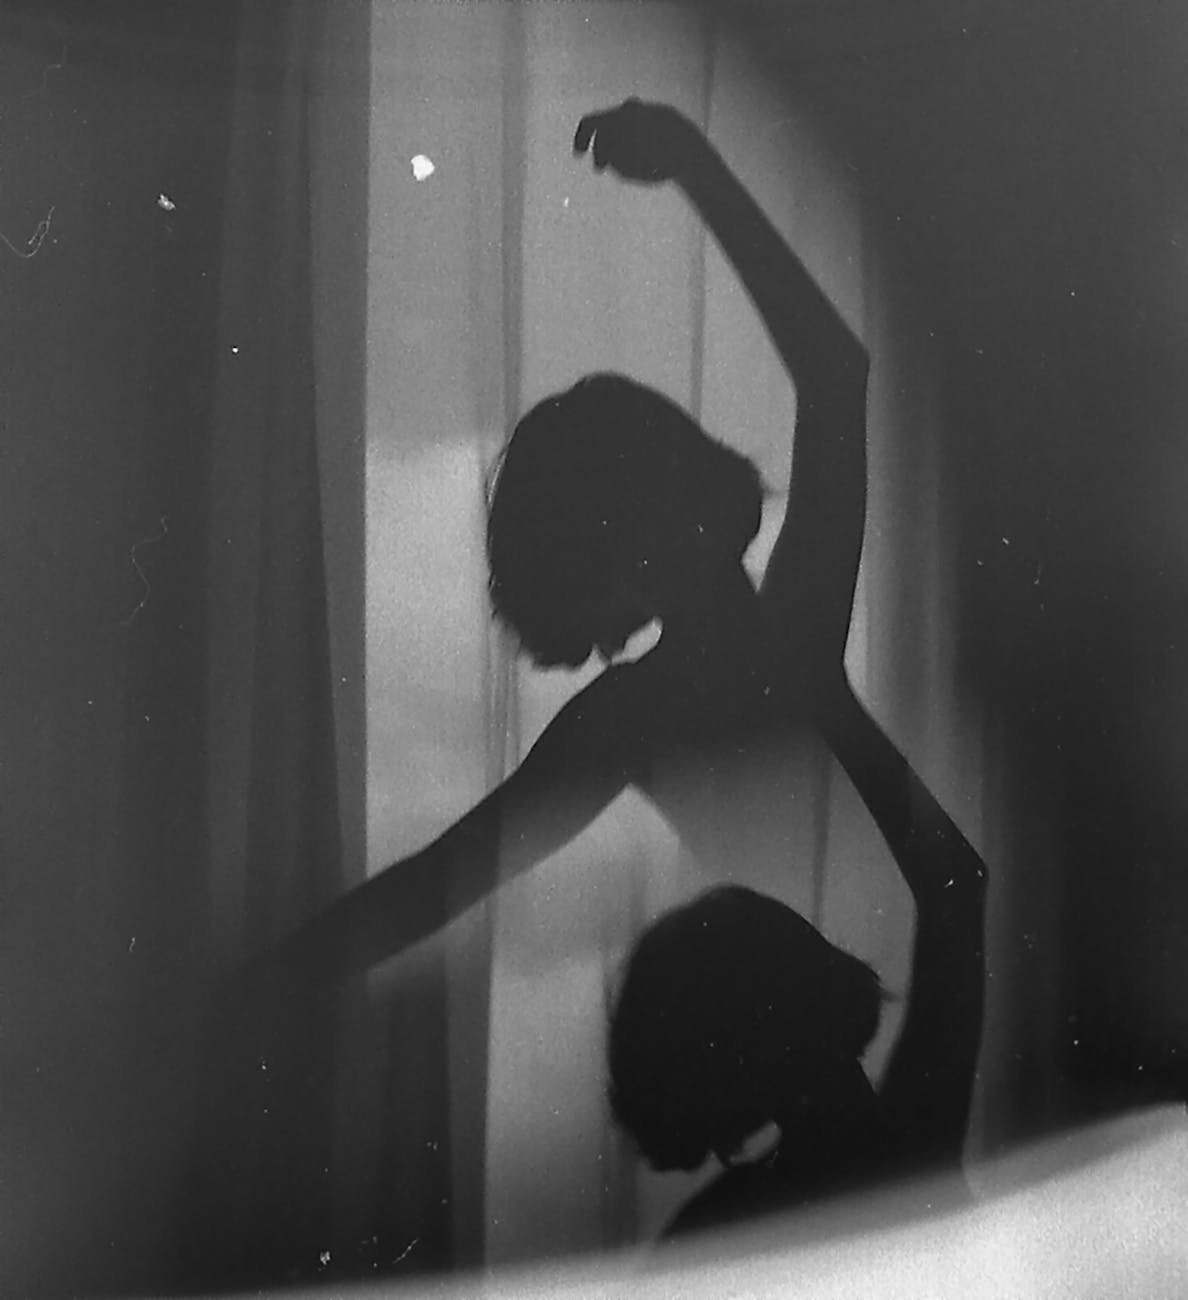 reflection of woman dancing